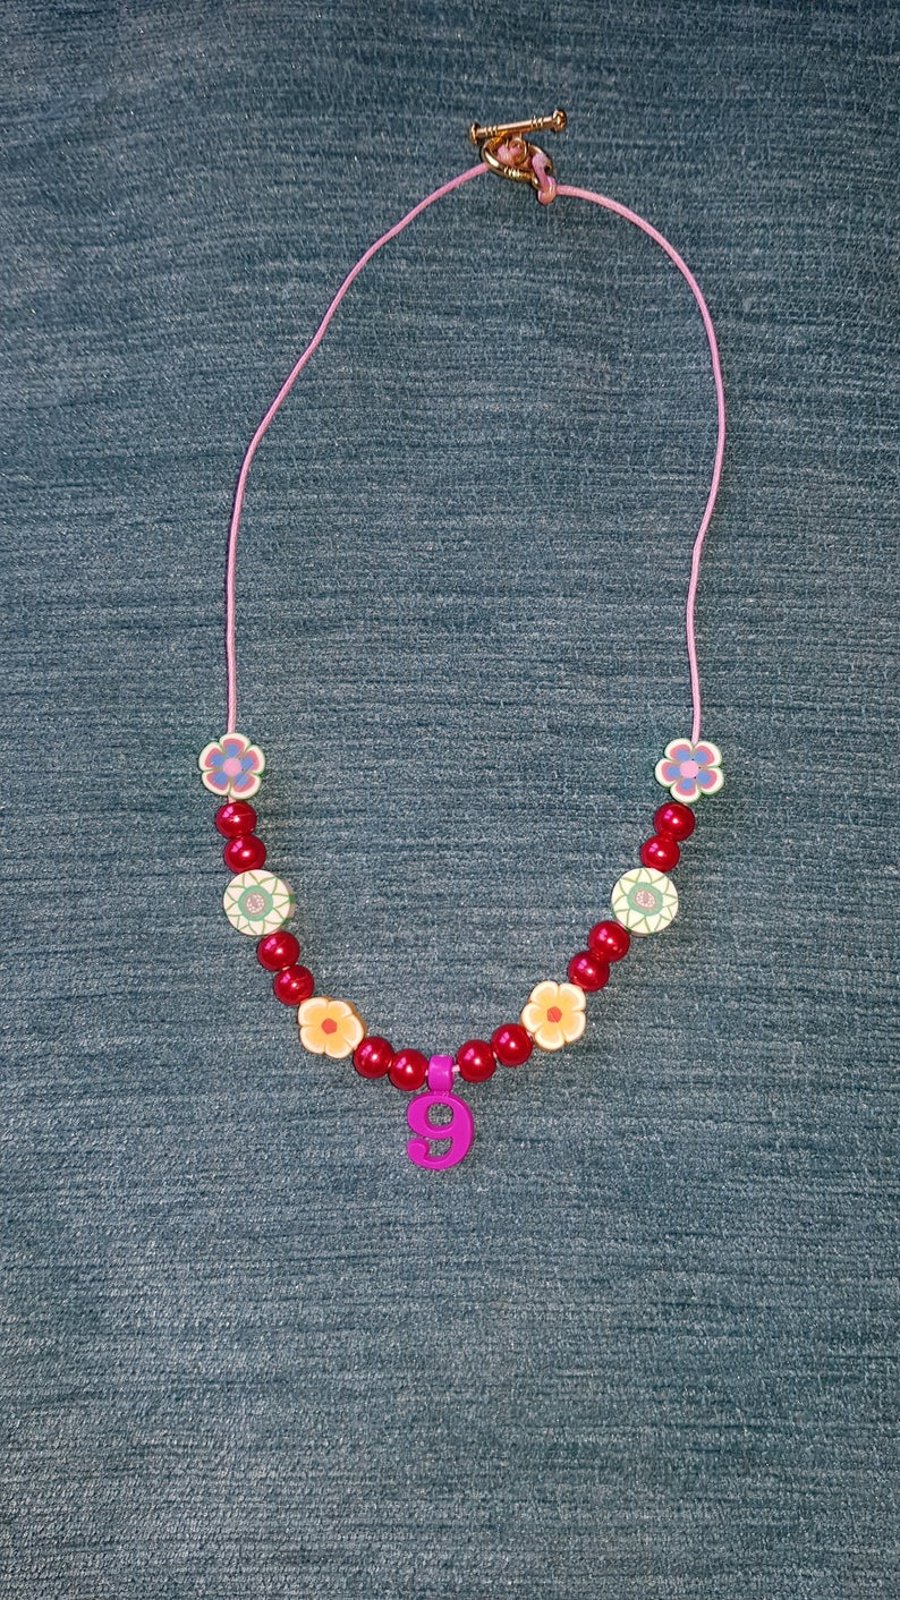 Children's '9' Charm Necklace